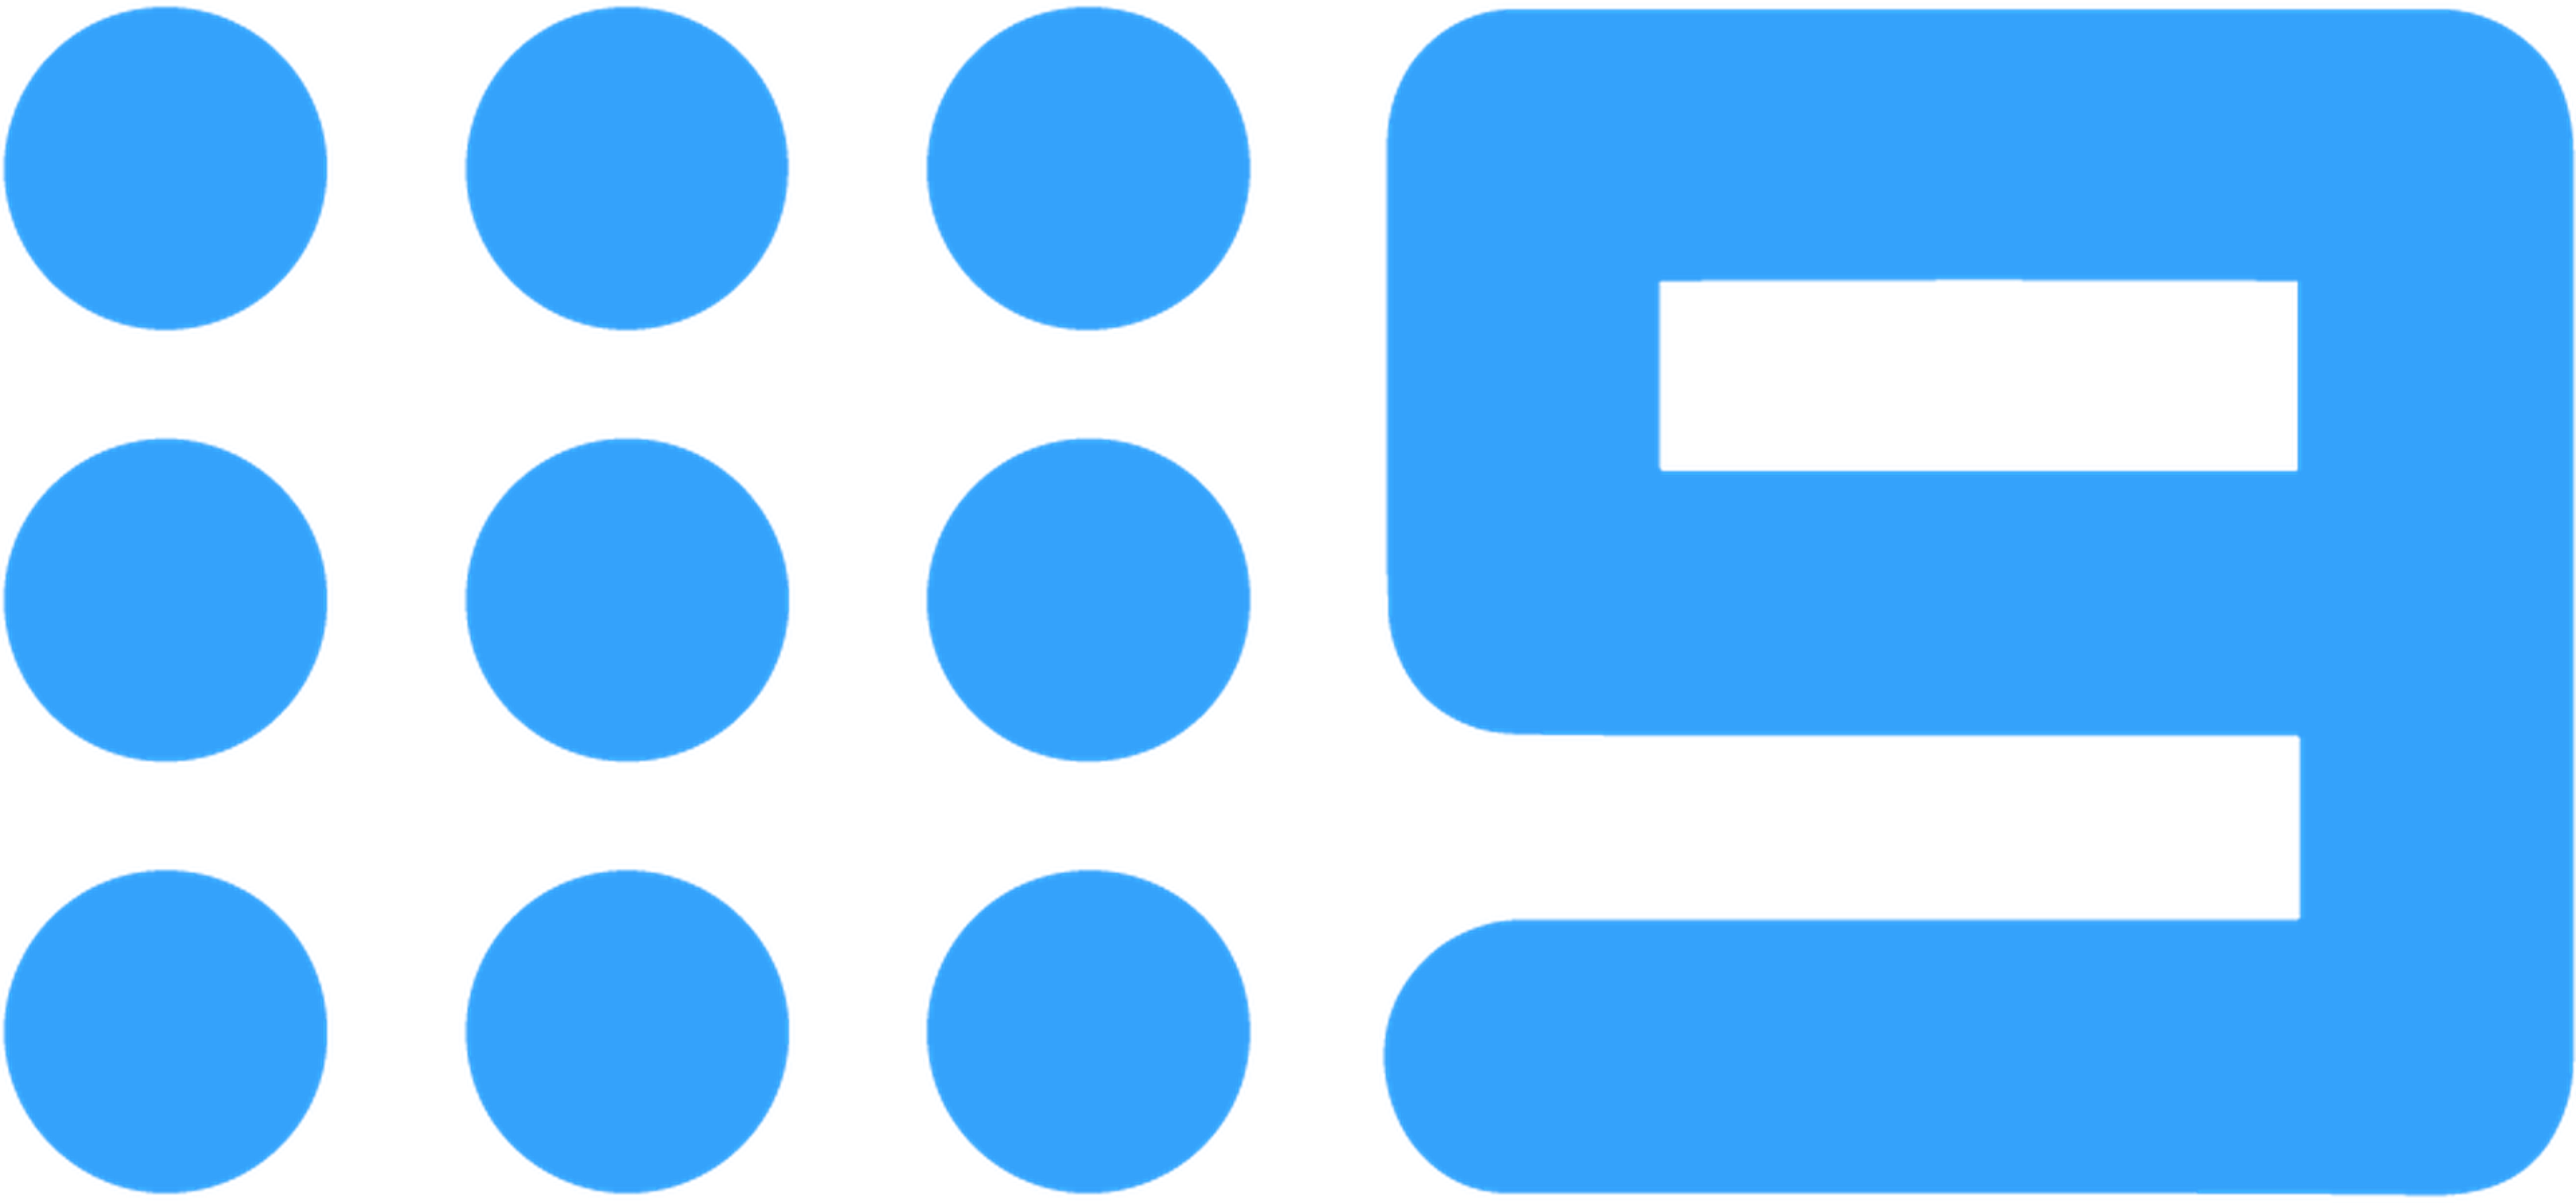 https://marcnewman.com.au/wp-content/uploads/sites/1100/2020/12/461-4615026_channel-nine-logo-channel-9-logo-png.png